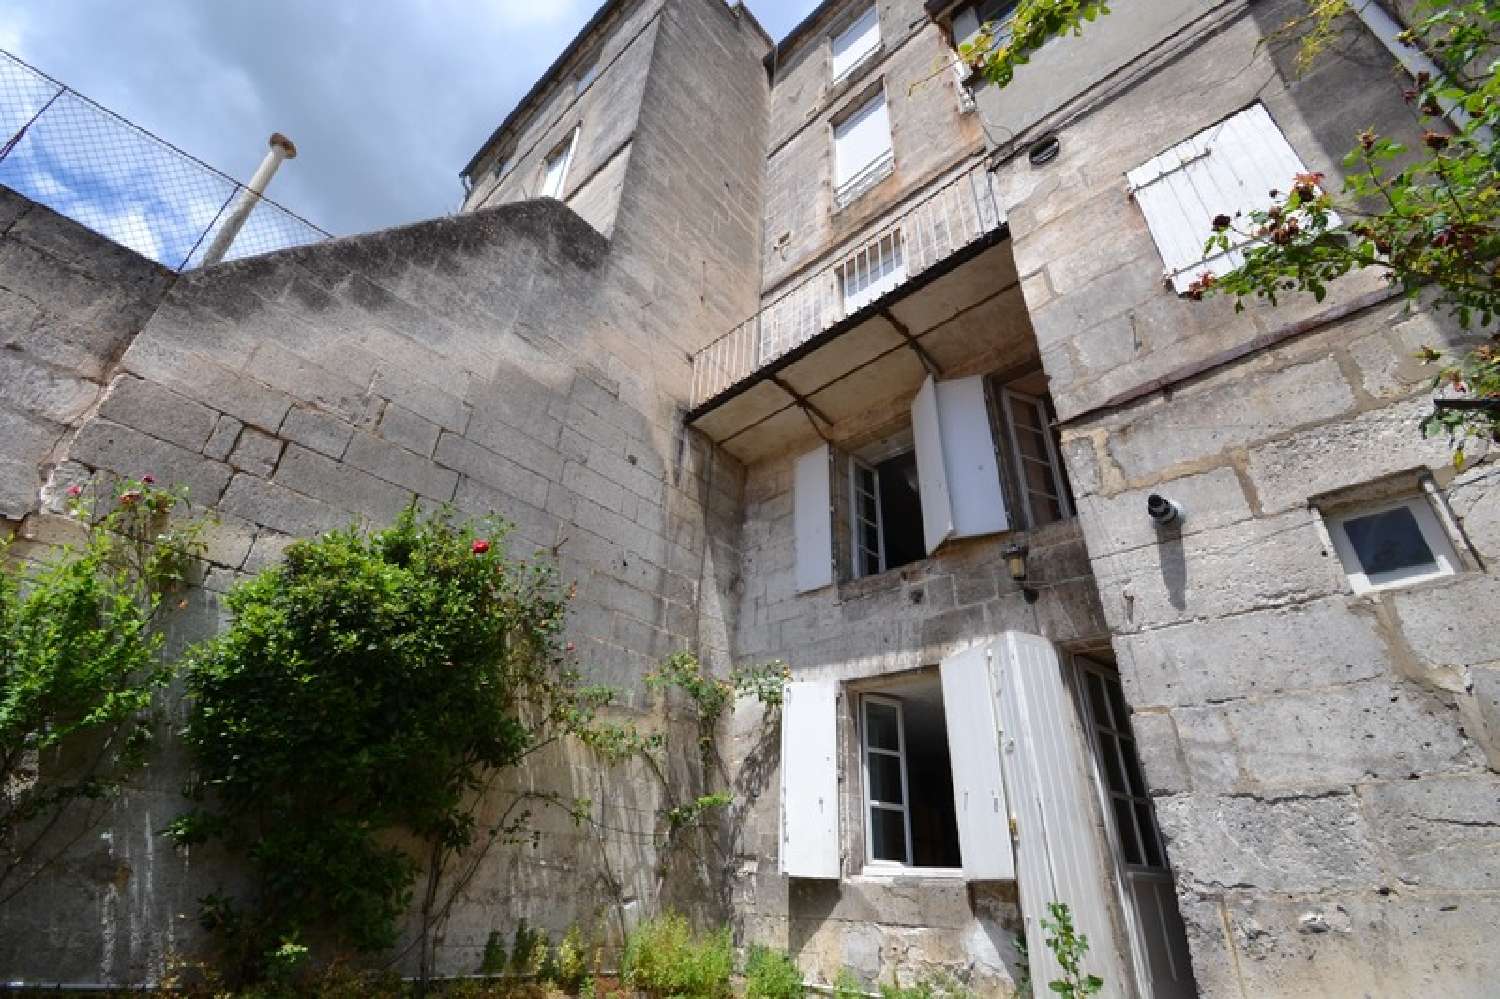  à vendre maison Angoulême Charente 4